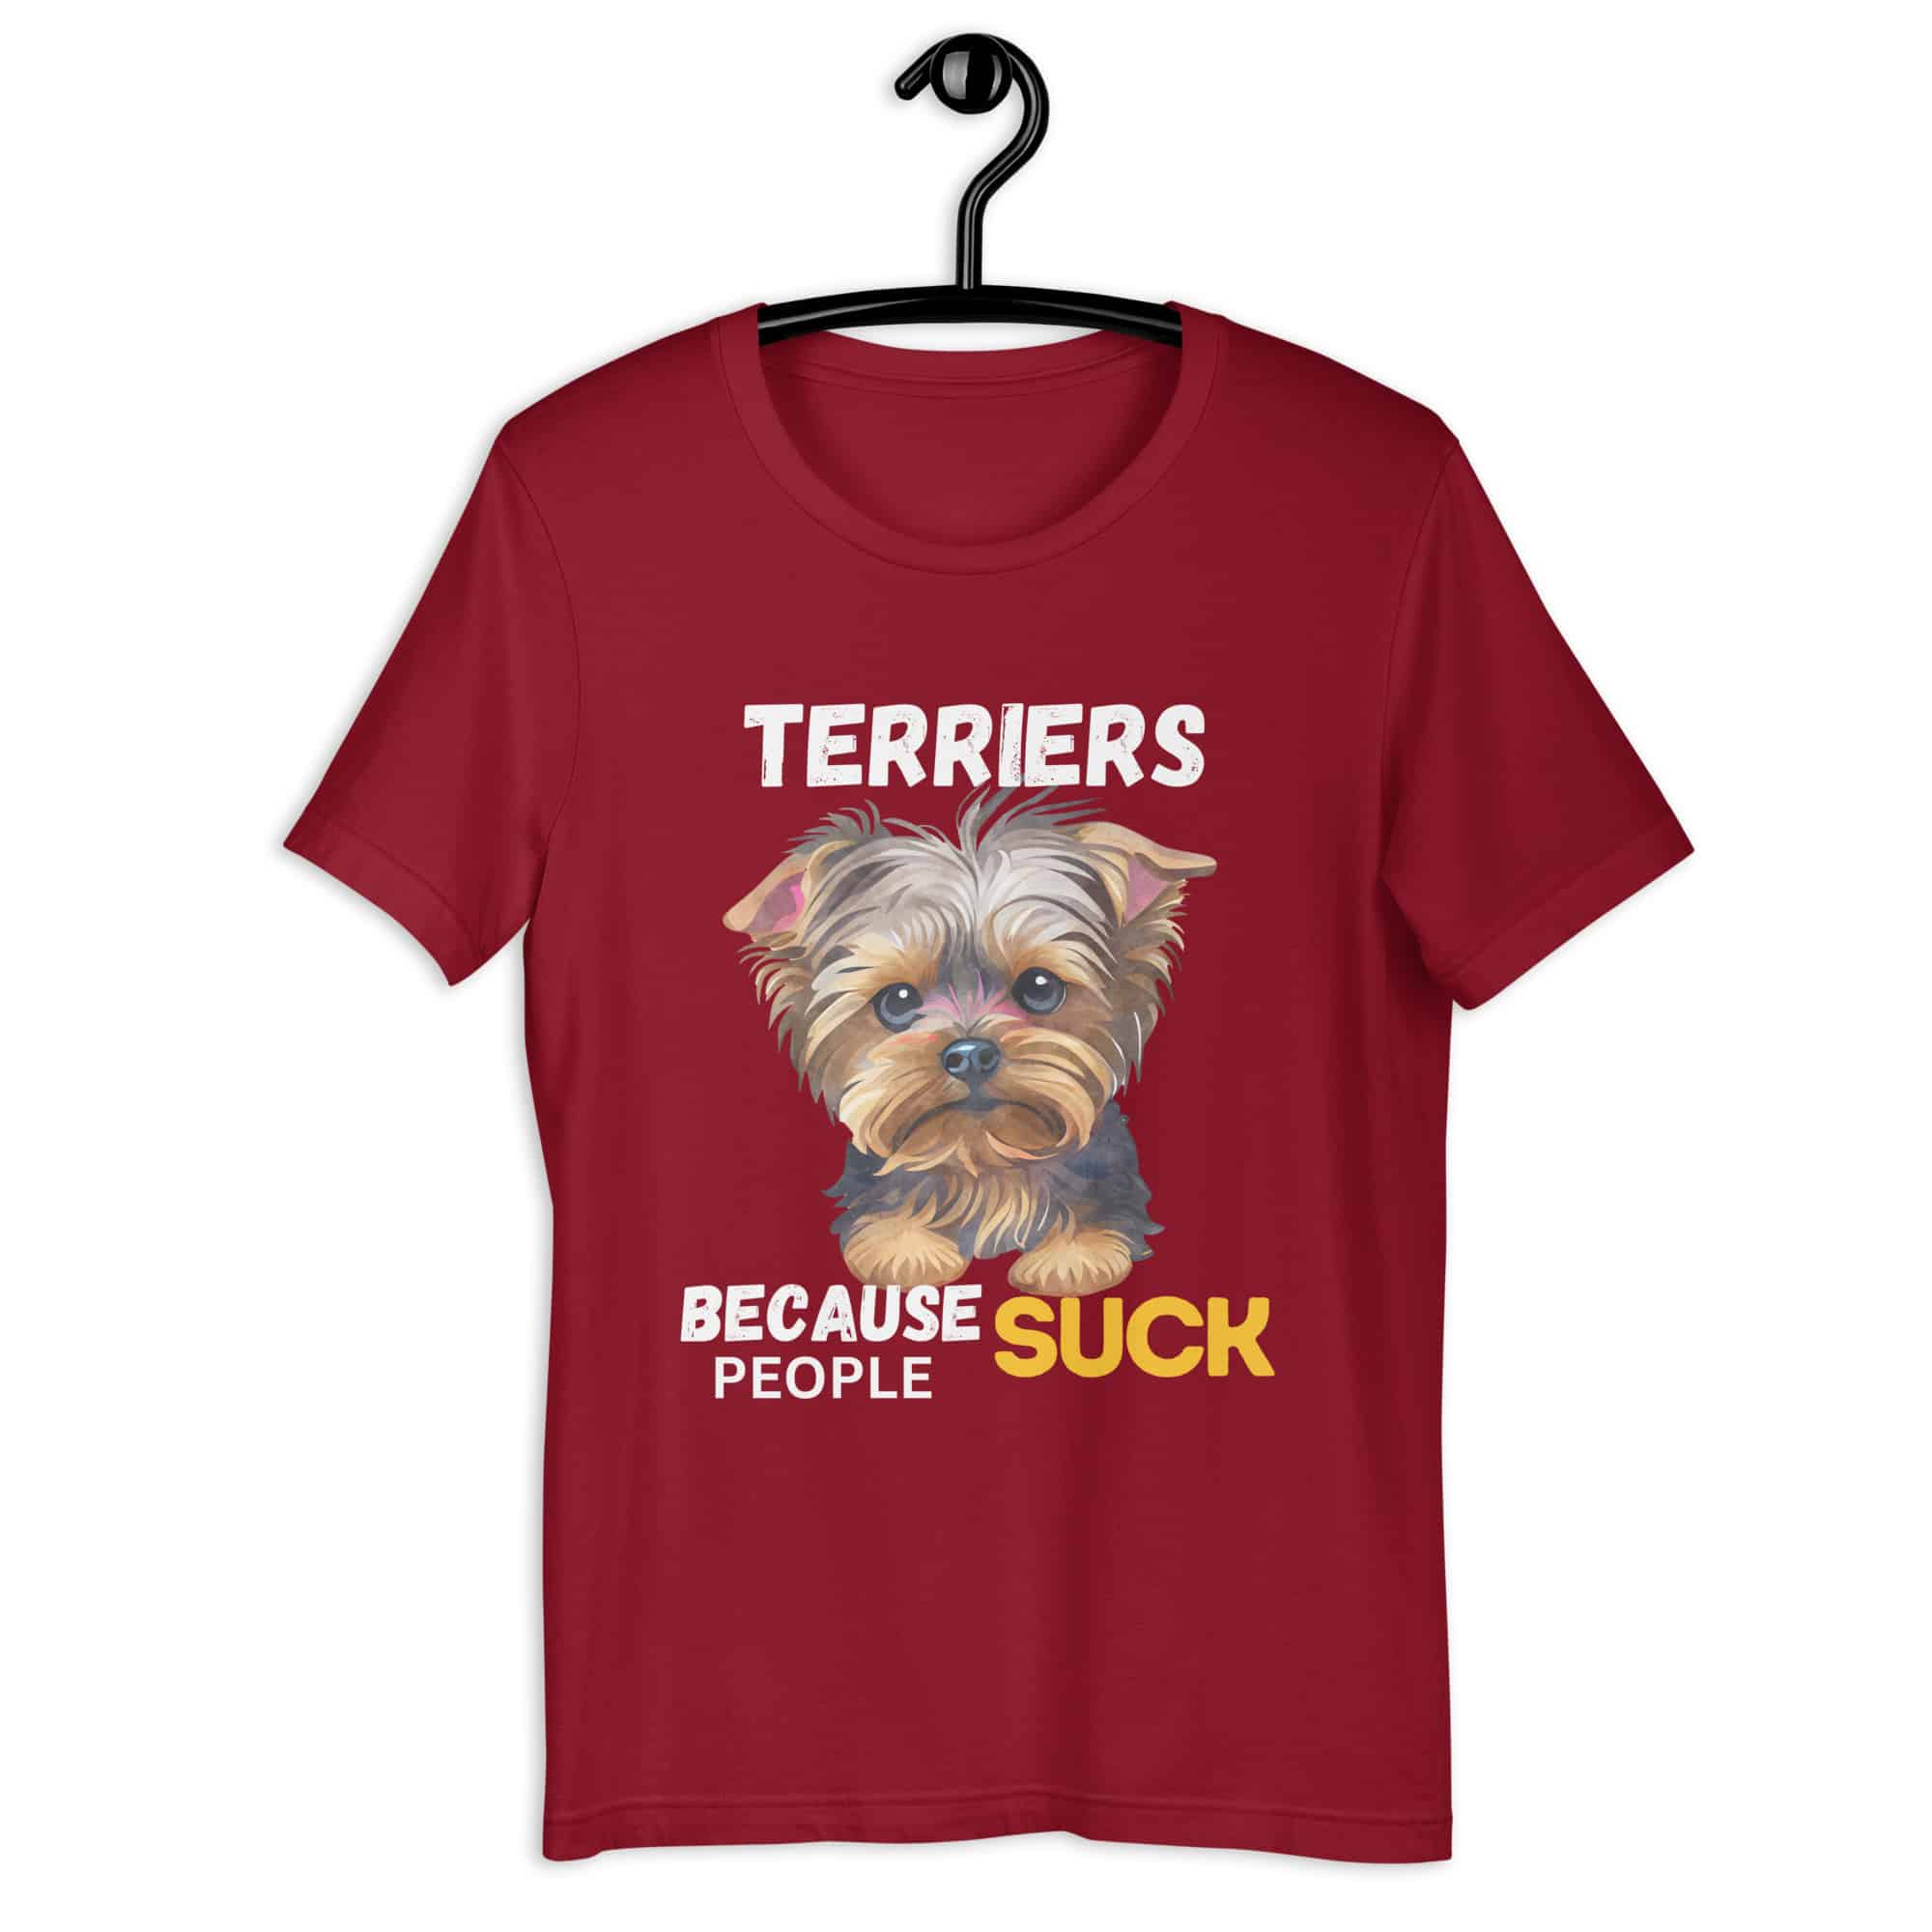 Terriers Because People Suck Unisex T-Shirt maroon